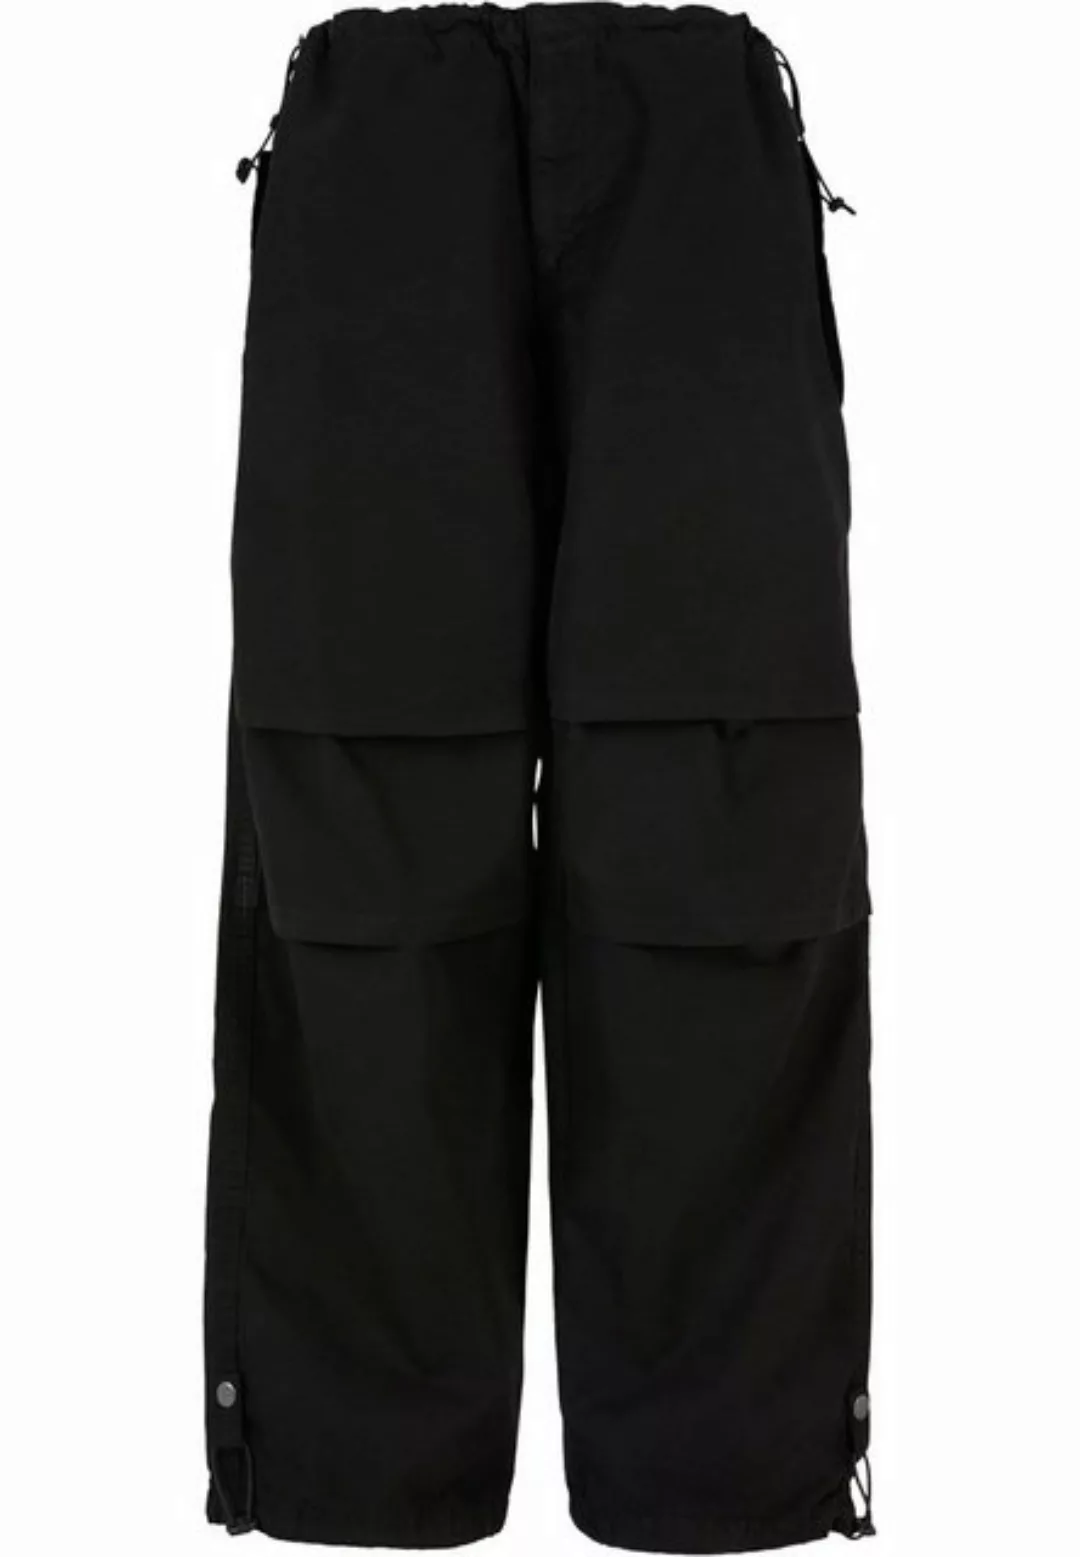 URBAN CLASSICS Stoffhose Urban Classics Damen Ladies Cotton Parachute Pants günstig online kaufen